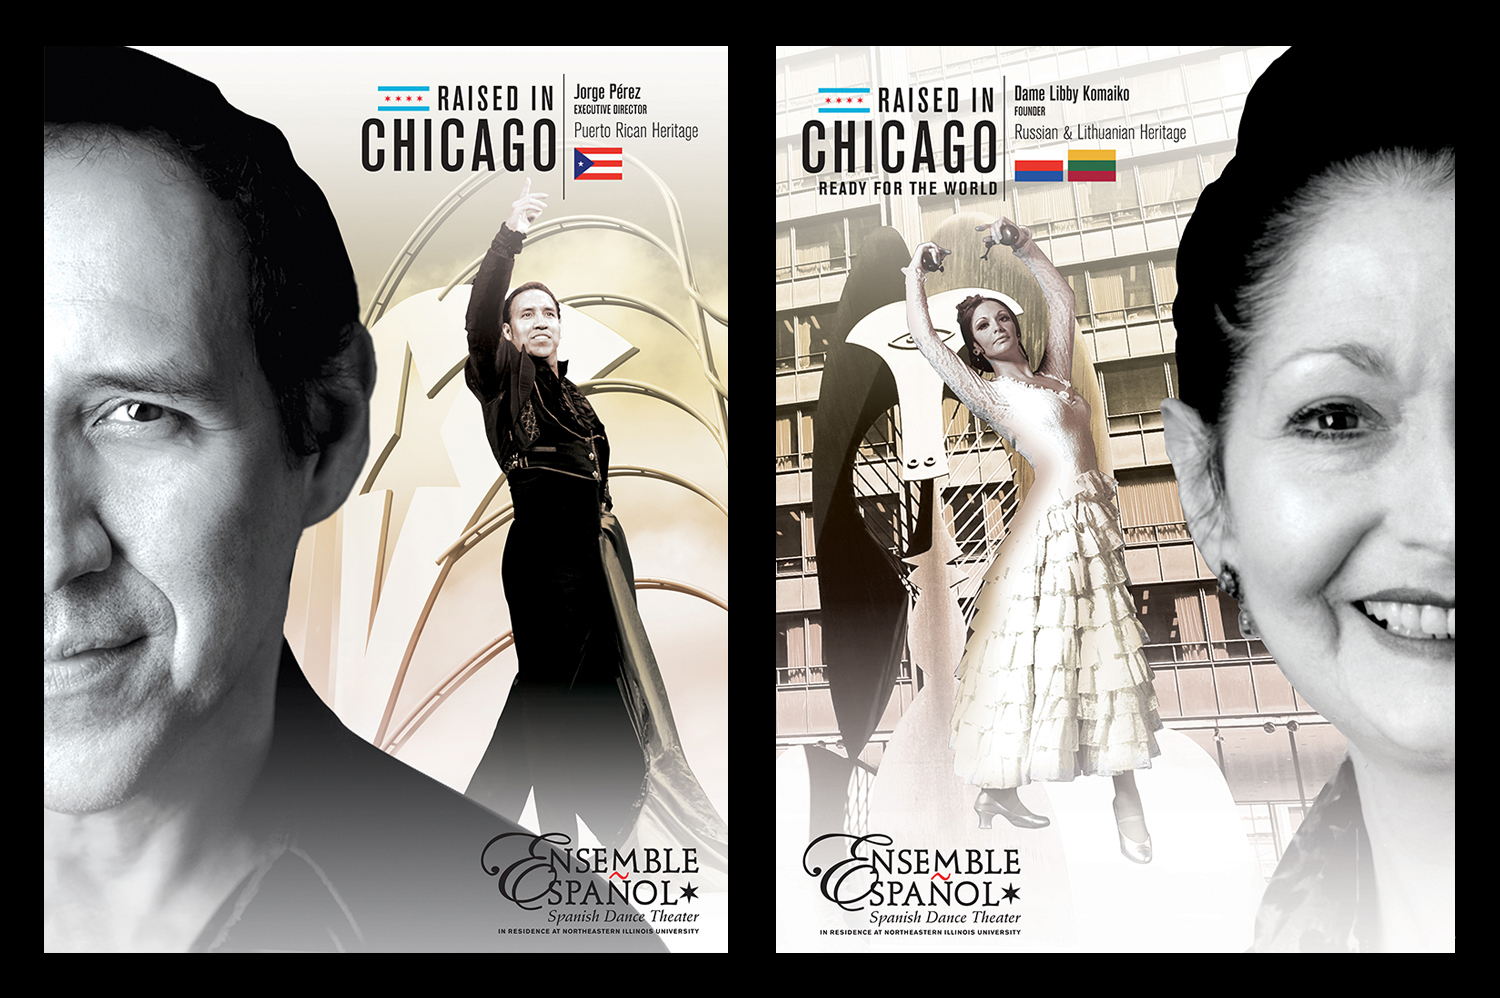 Ensemble Español Raised In Chicago Marketing Campaign